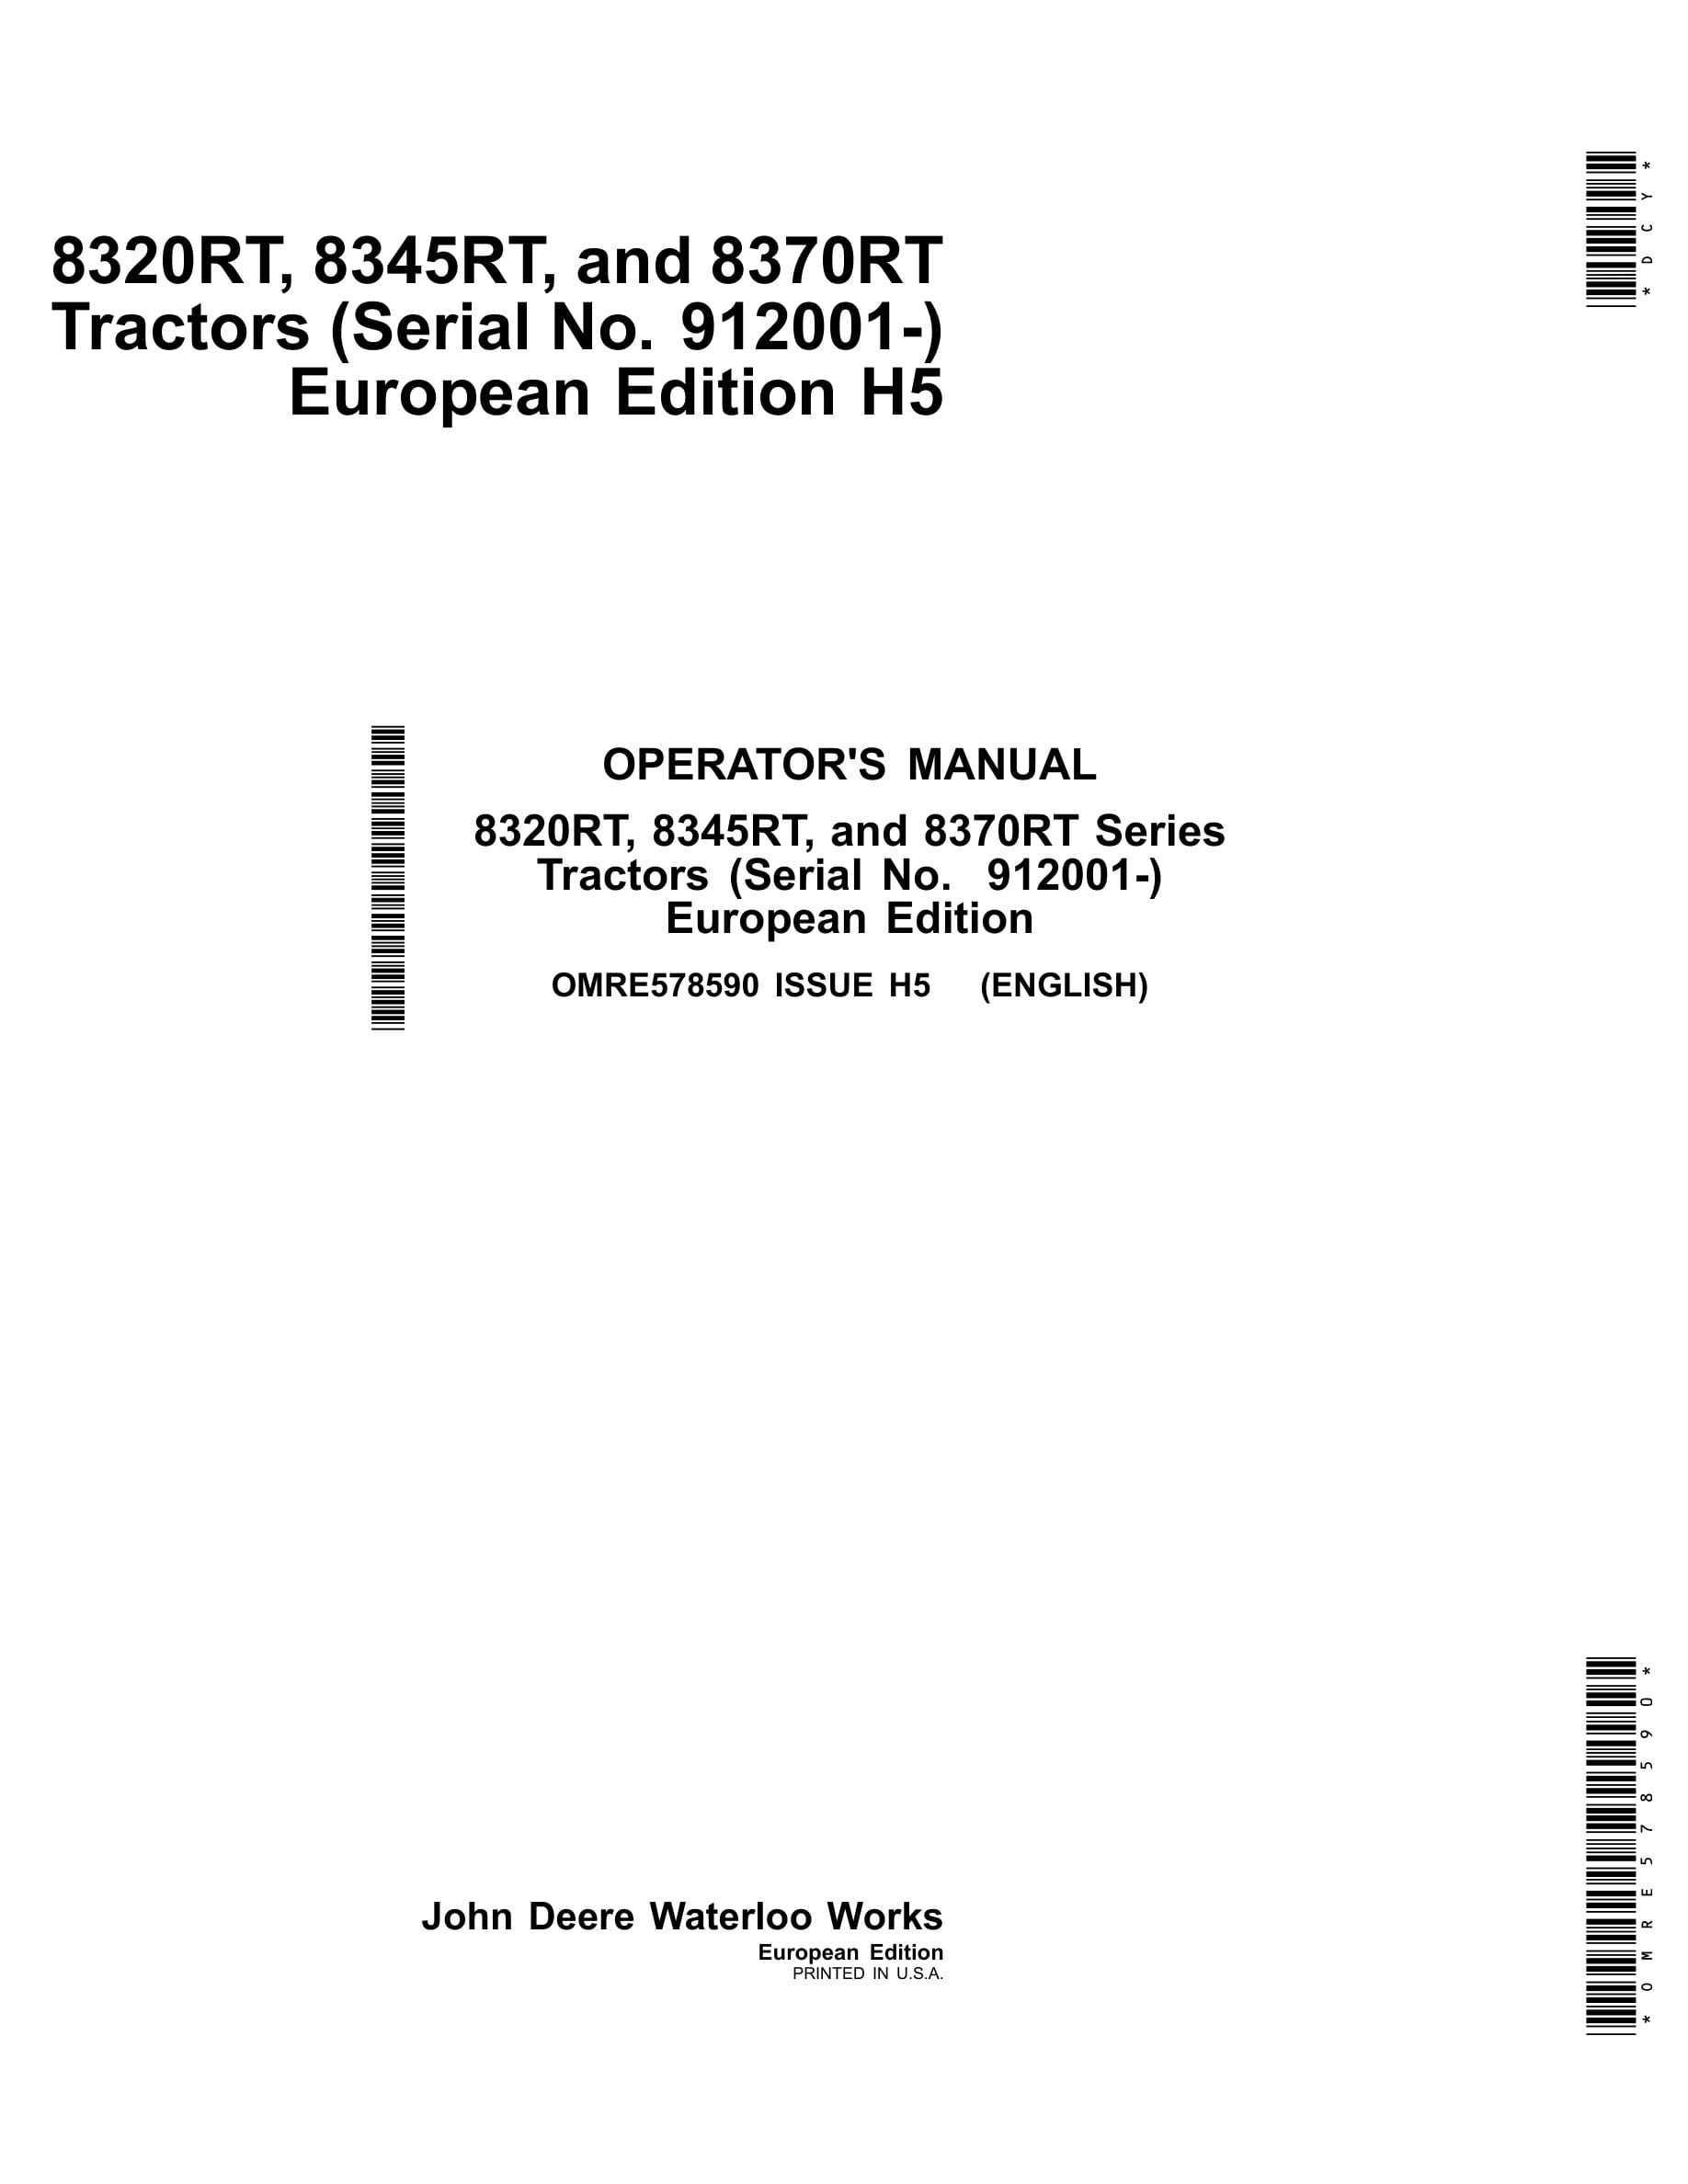 John Deere 8320rt, 8345rt, And 8370rt Series Tractors Operator Manuals OMRE578590-1